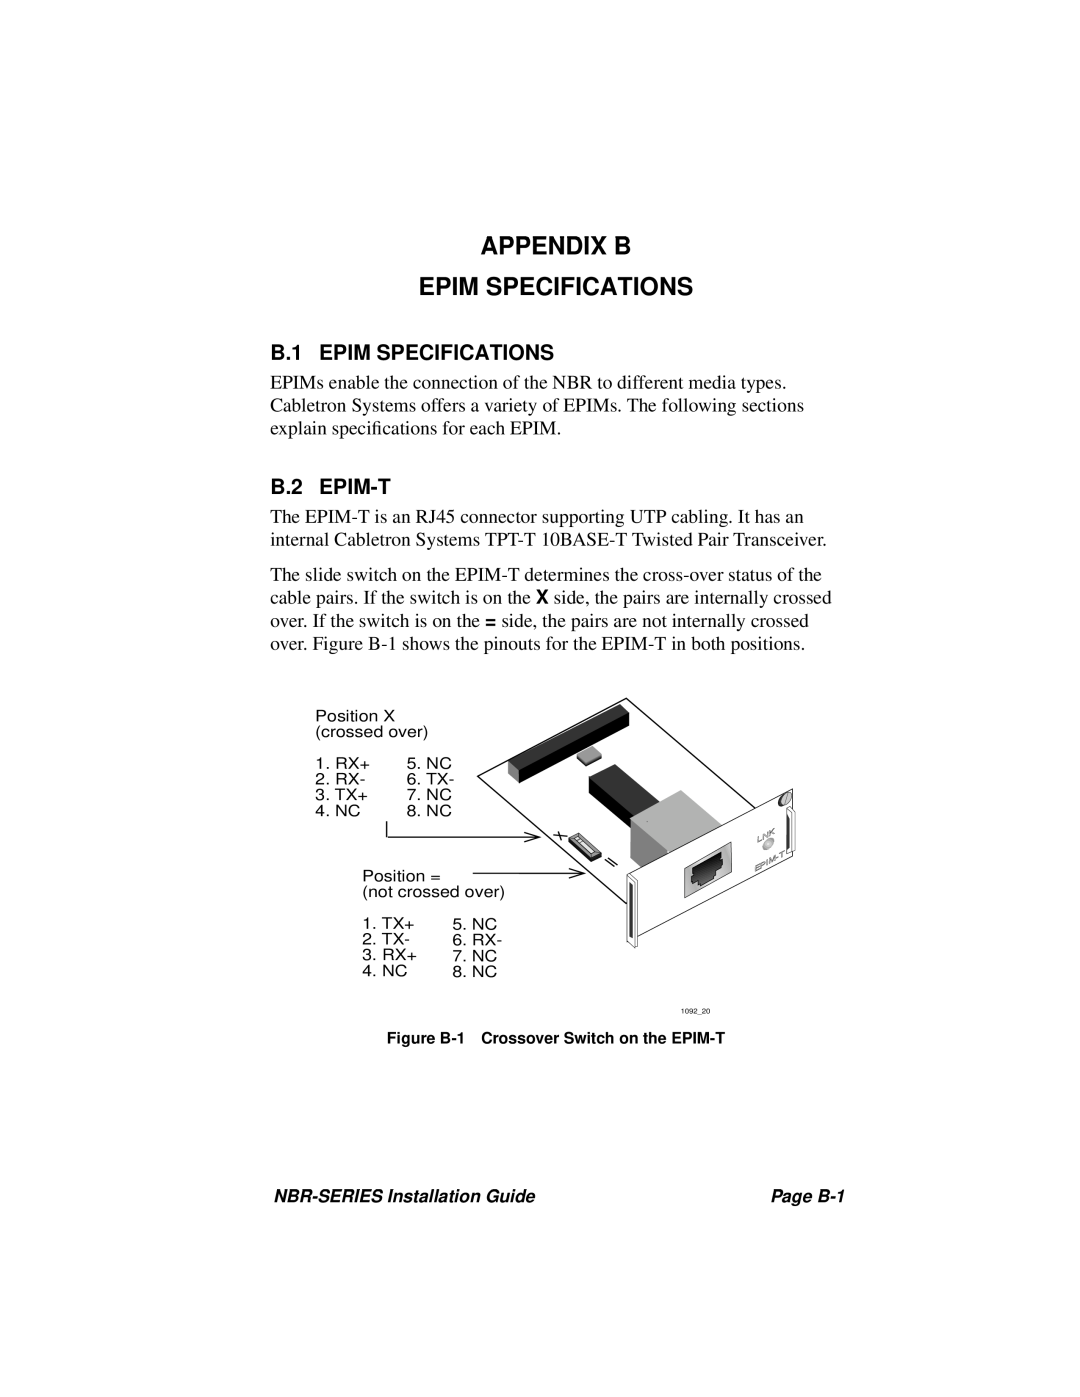 Cabletron Systems NBR-420, NBR-220, NBR-620 manual Appendix B Epim Specifications, B.1 EPIM SPECIFICATIONS, B.2 EPIM-T 